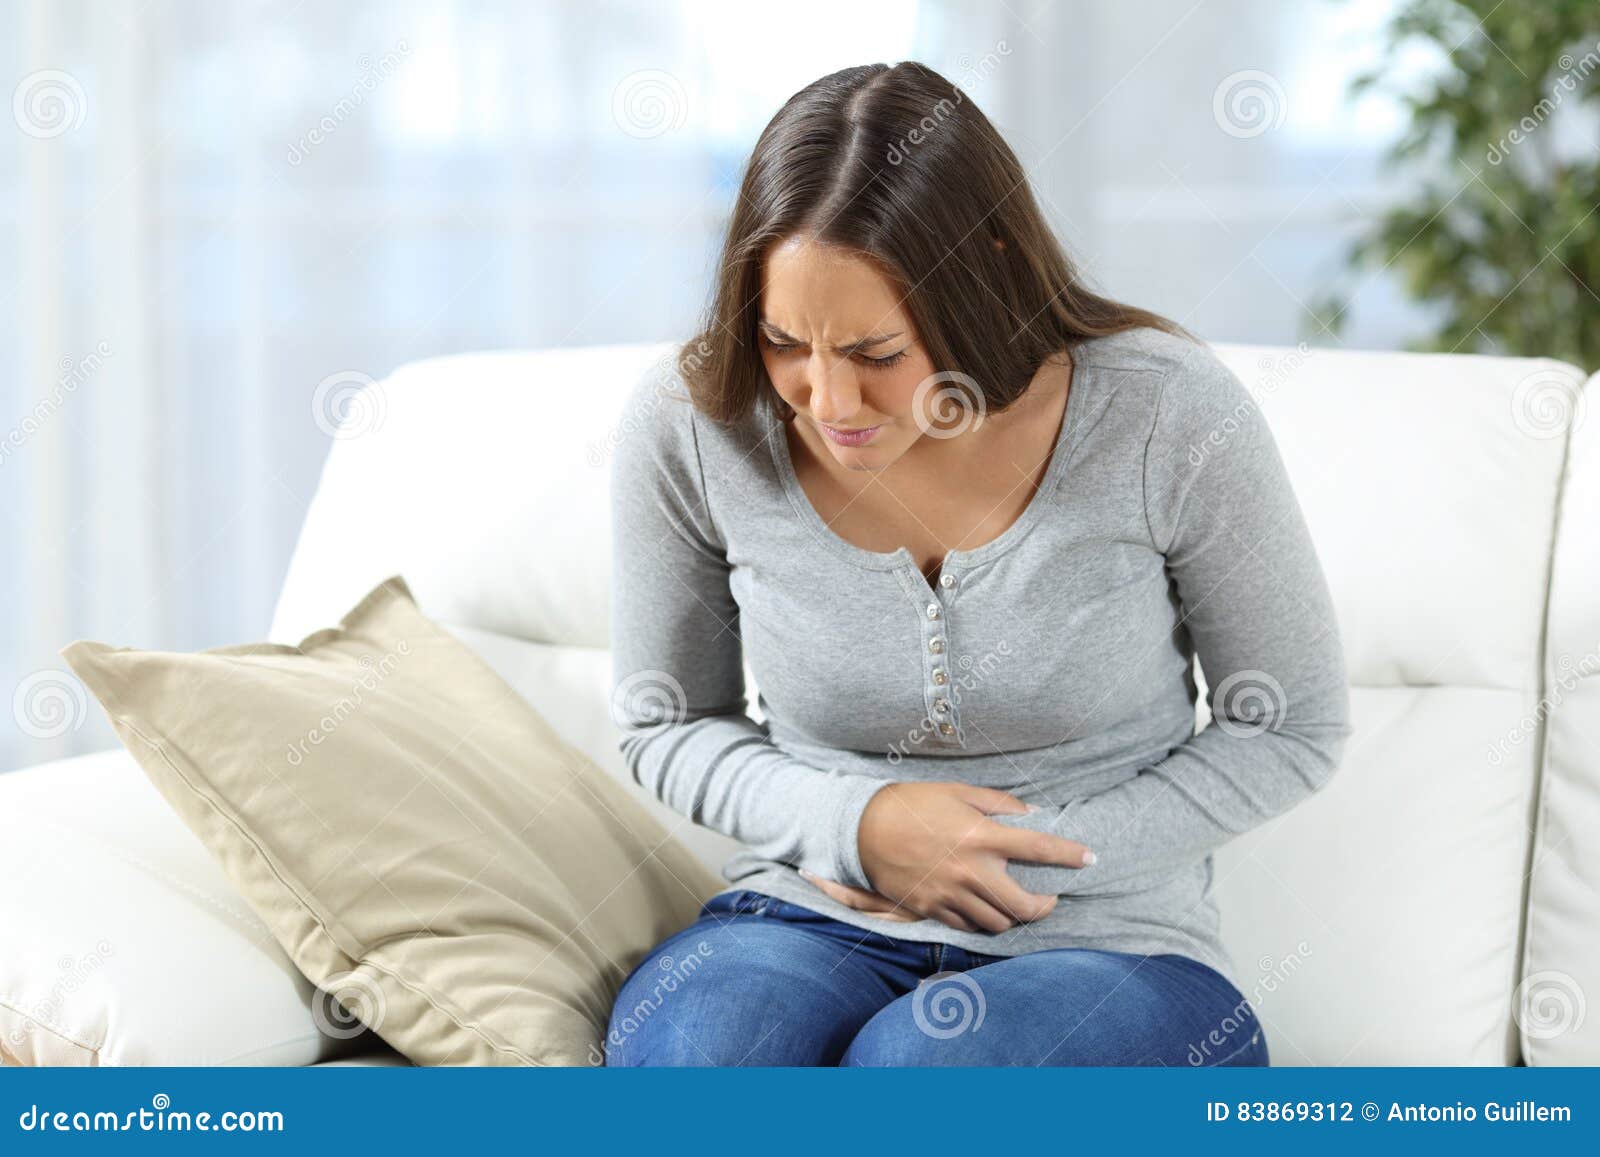 woman suffering stomach ache